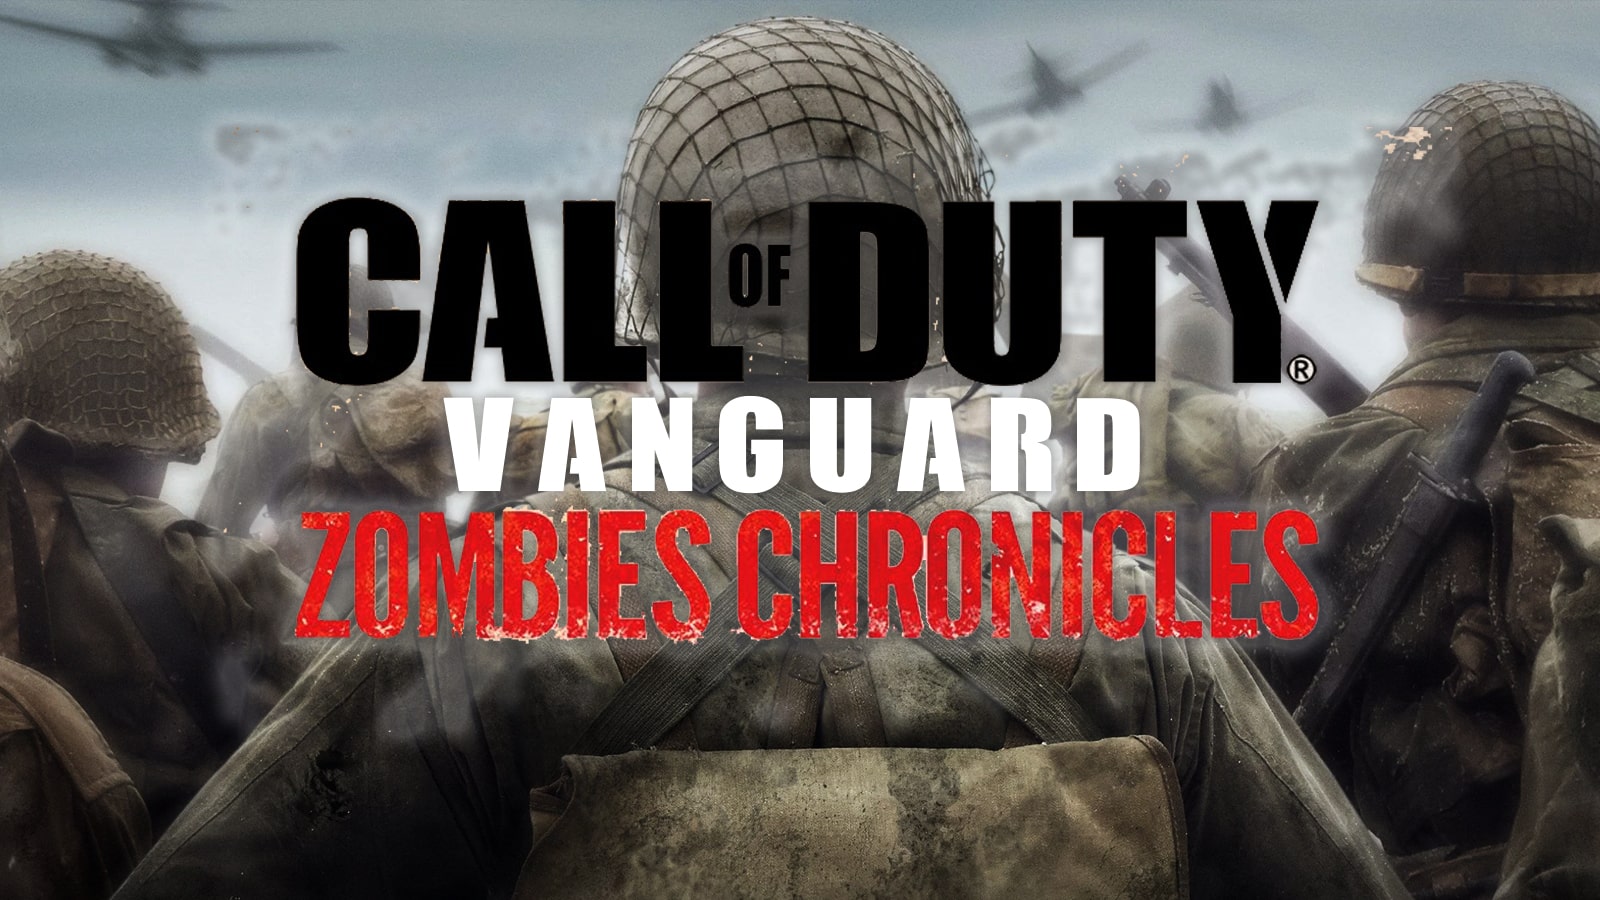 call of duty world at war zombies logo